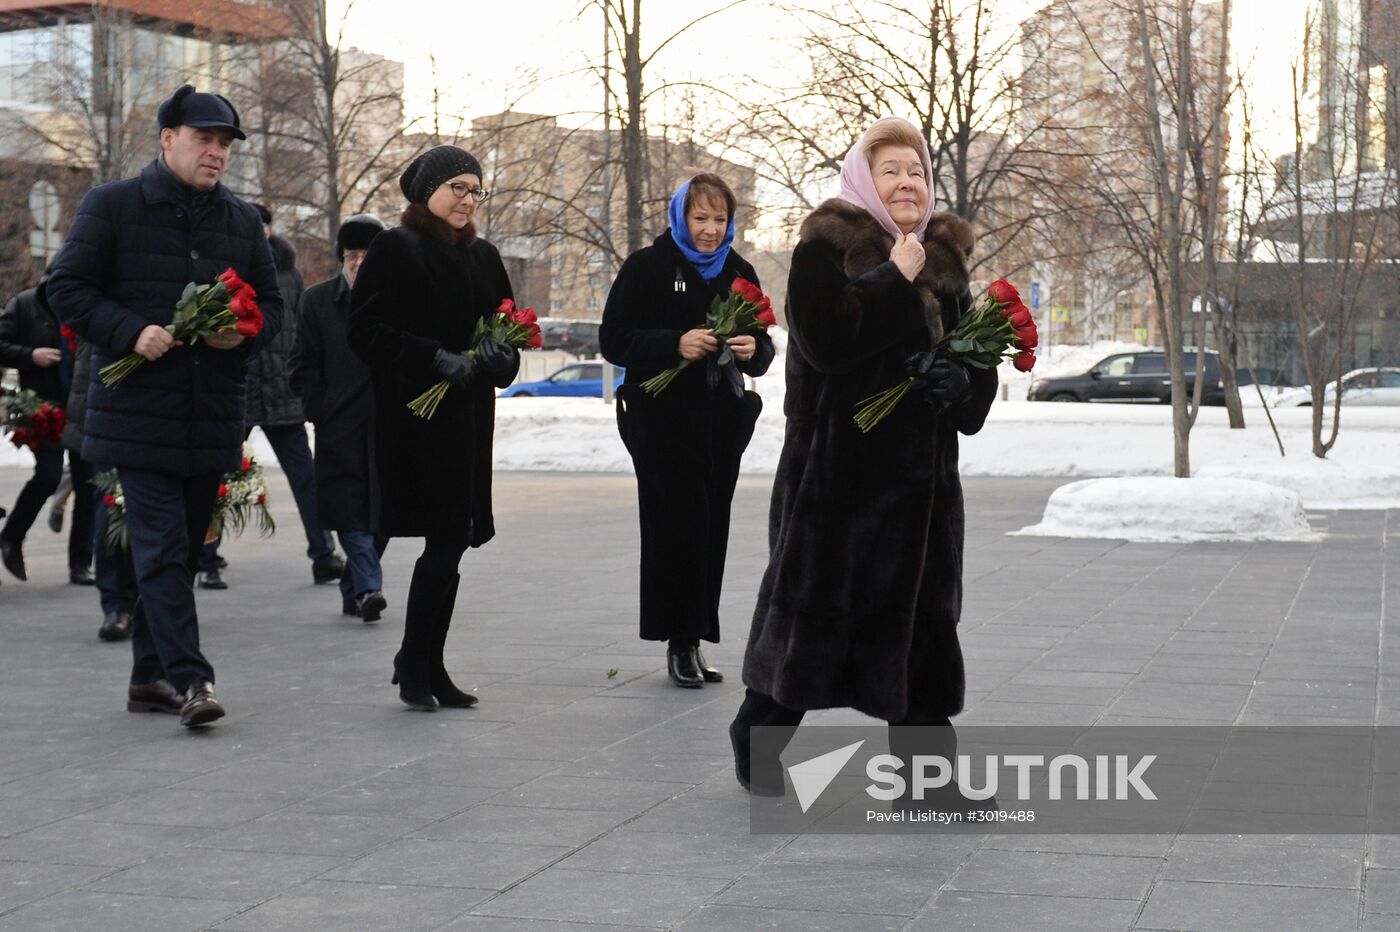 Events marking Boris Yeltsin's 86th birthday in Yekaterinburg